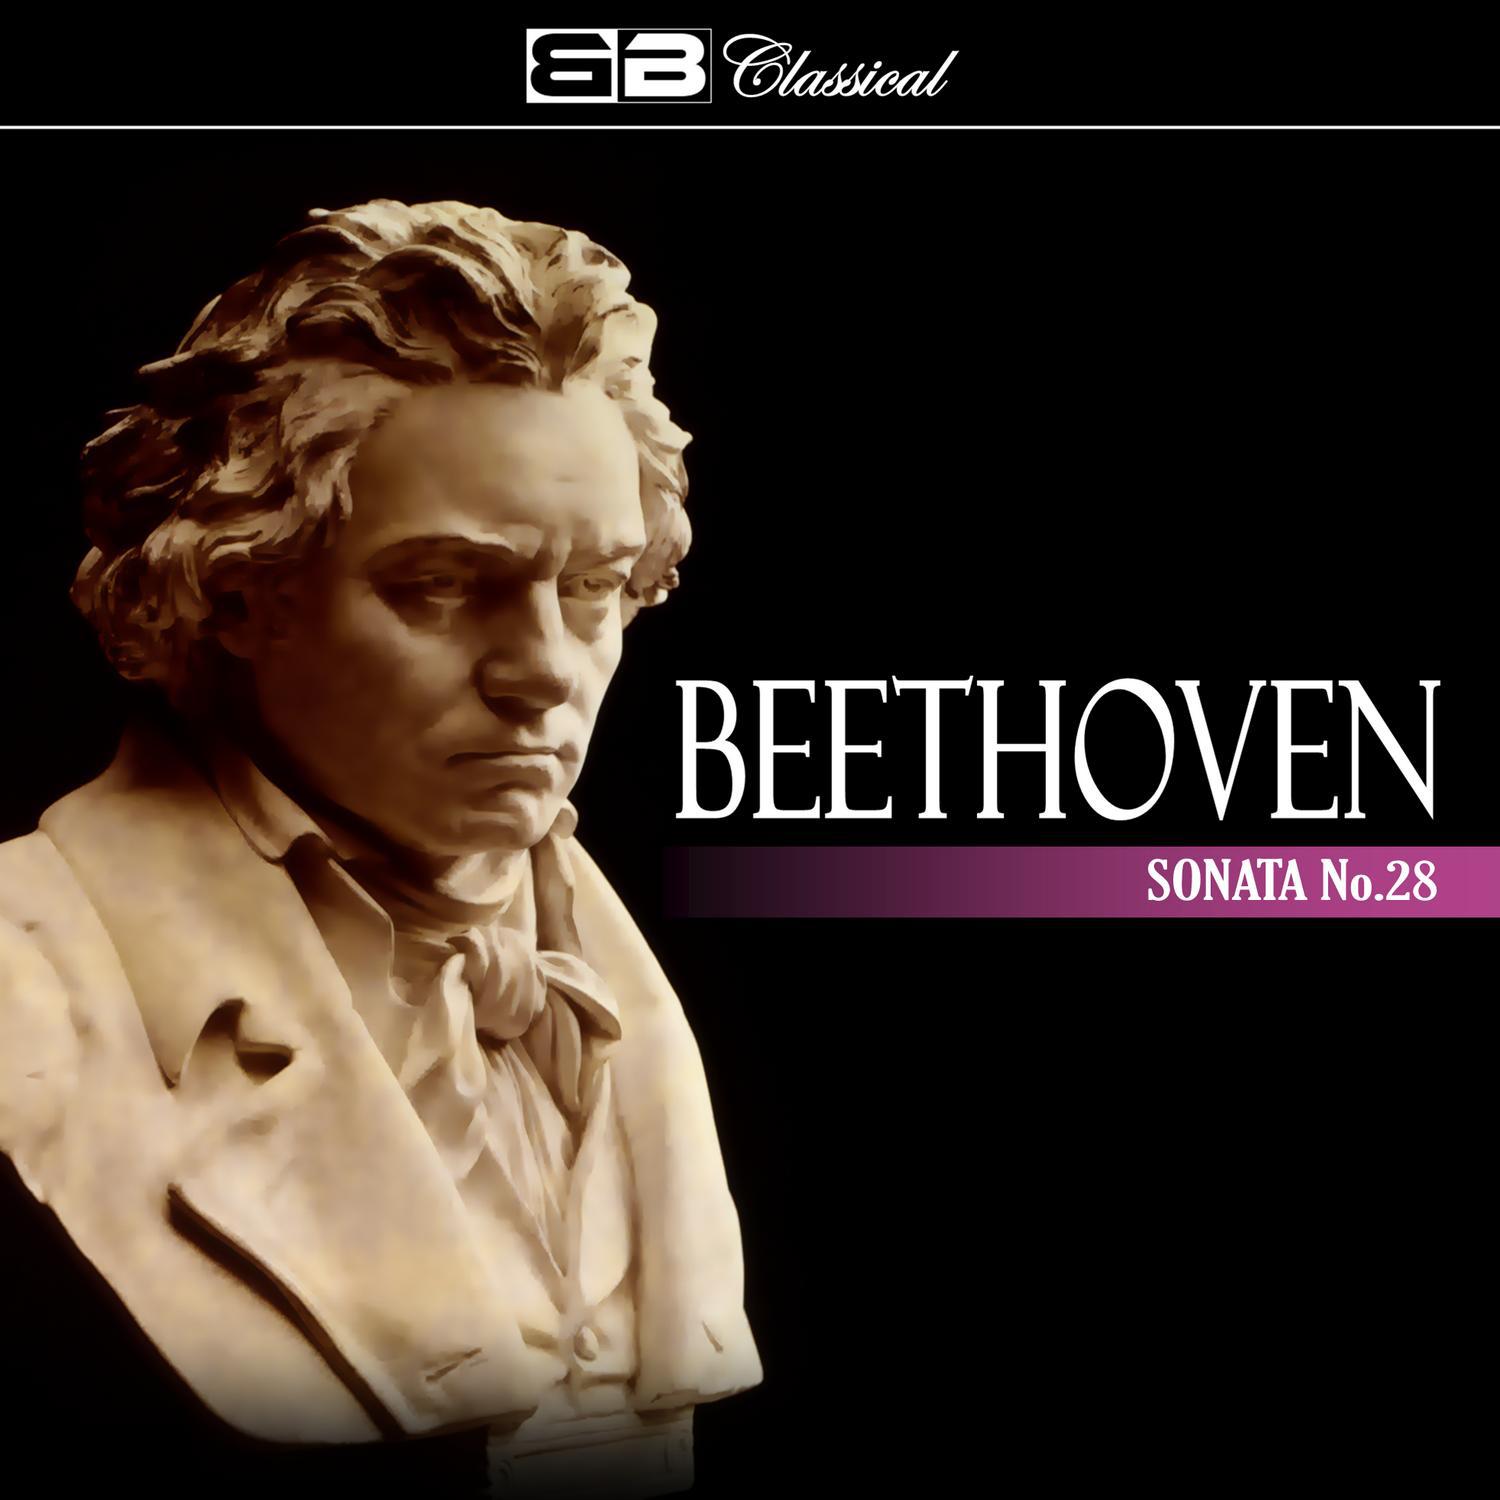 Beethoven Sonata No. 28